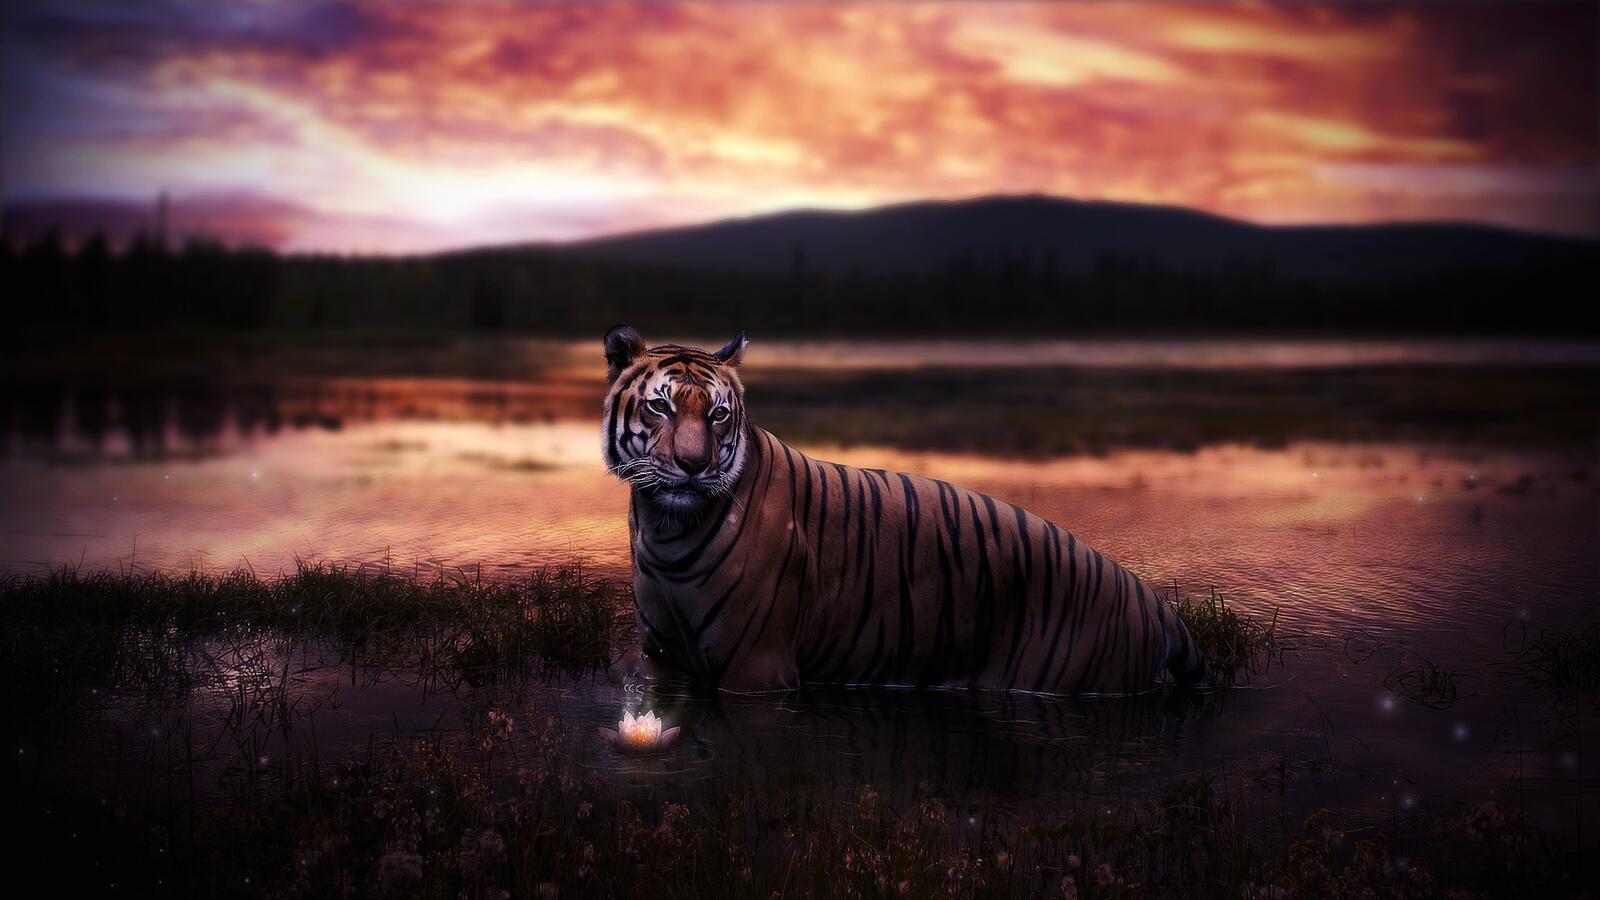 Wallpapers rendering tiger swamp on the desktop